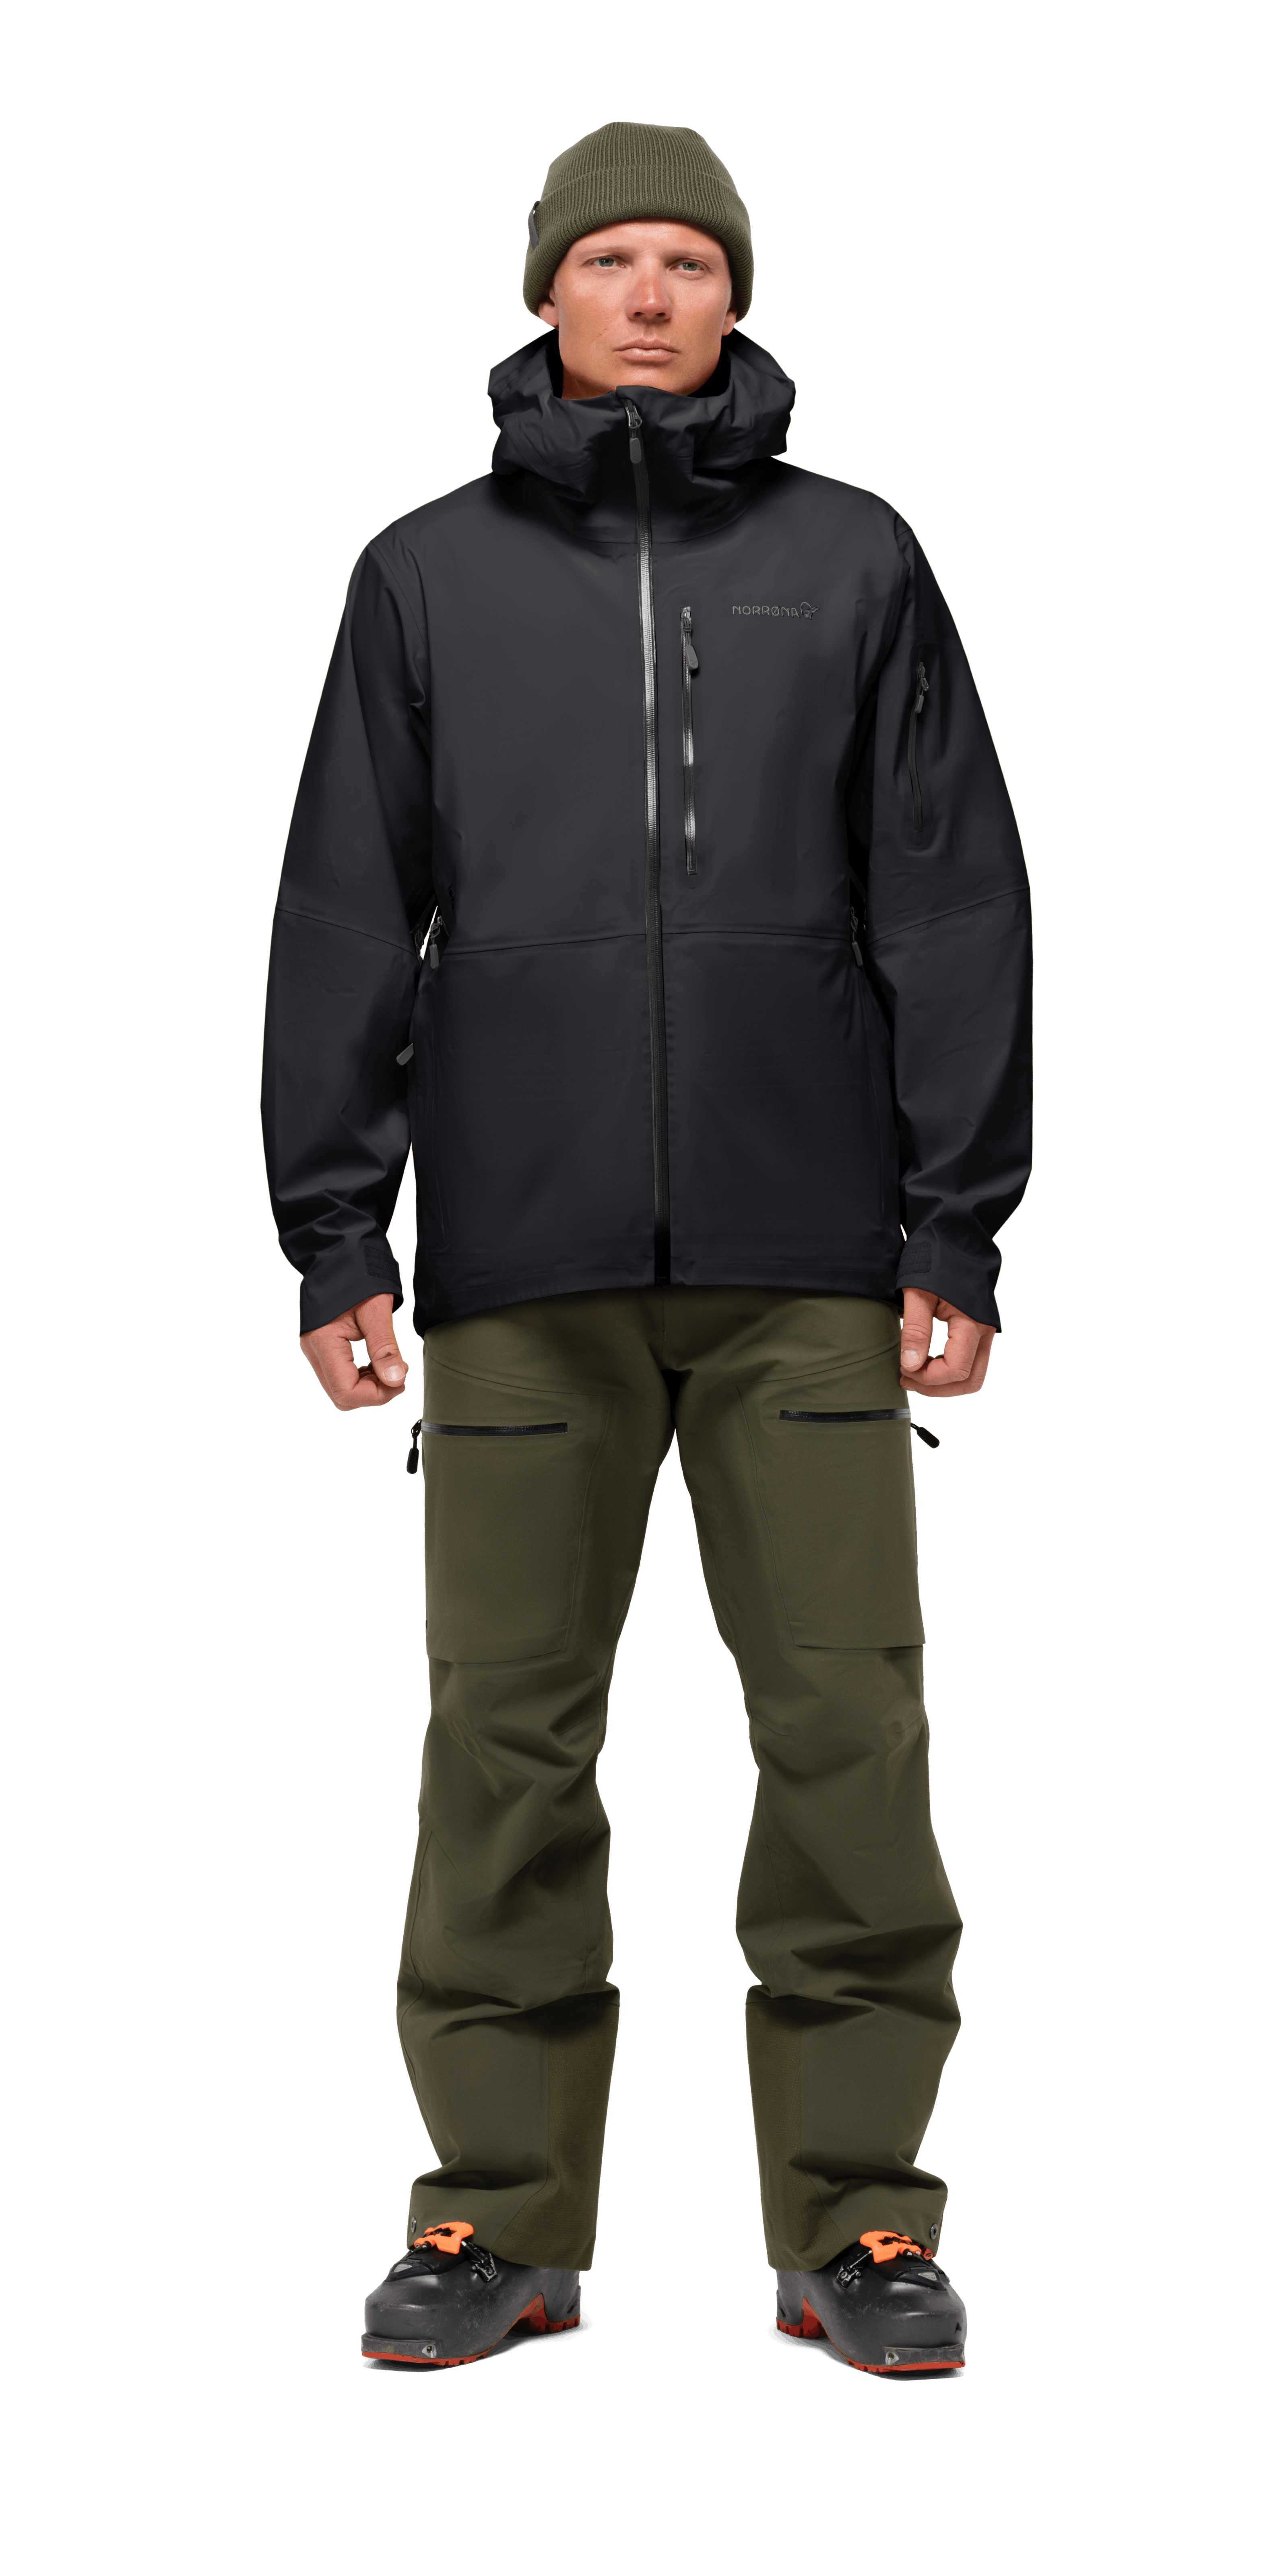 Norrona Men's Lofoten GORE-TEX Jacket